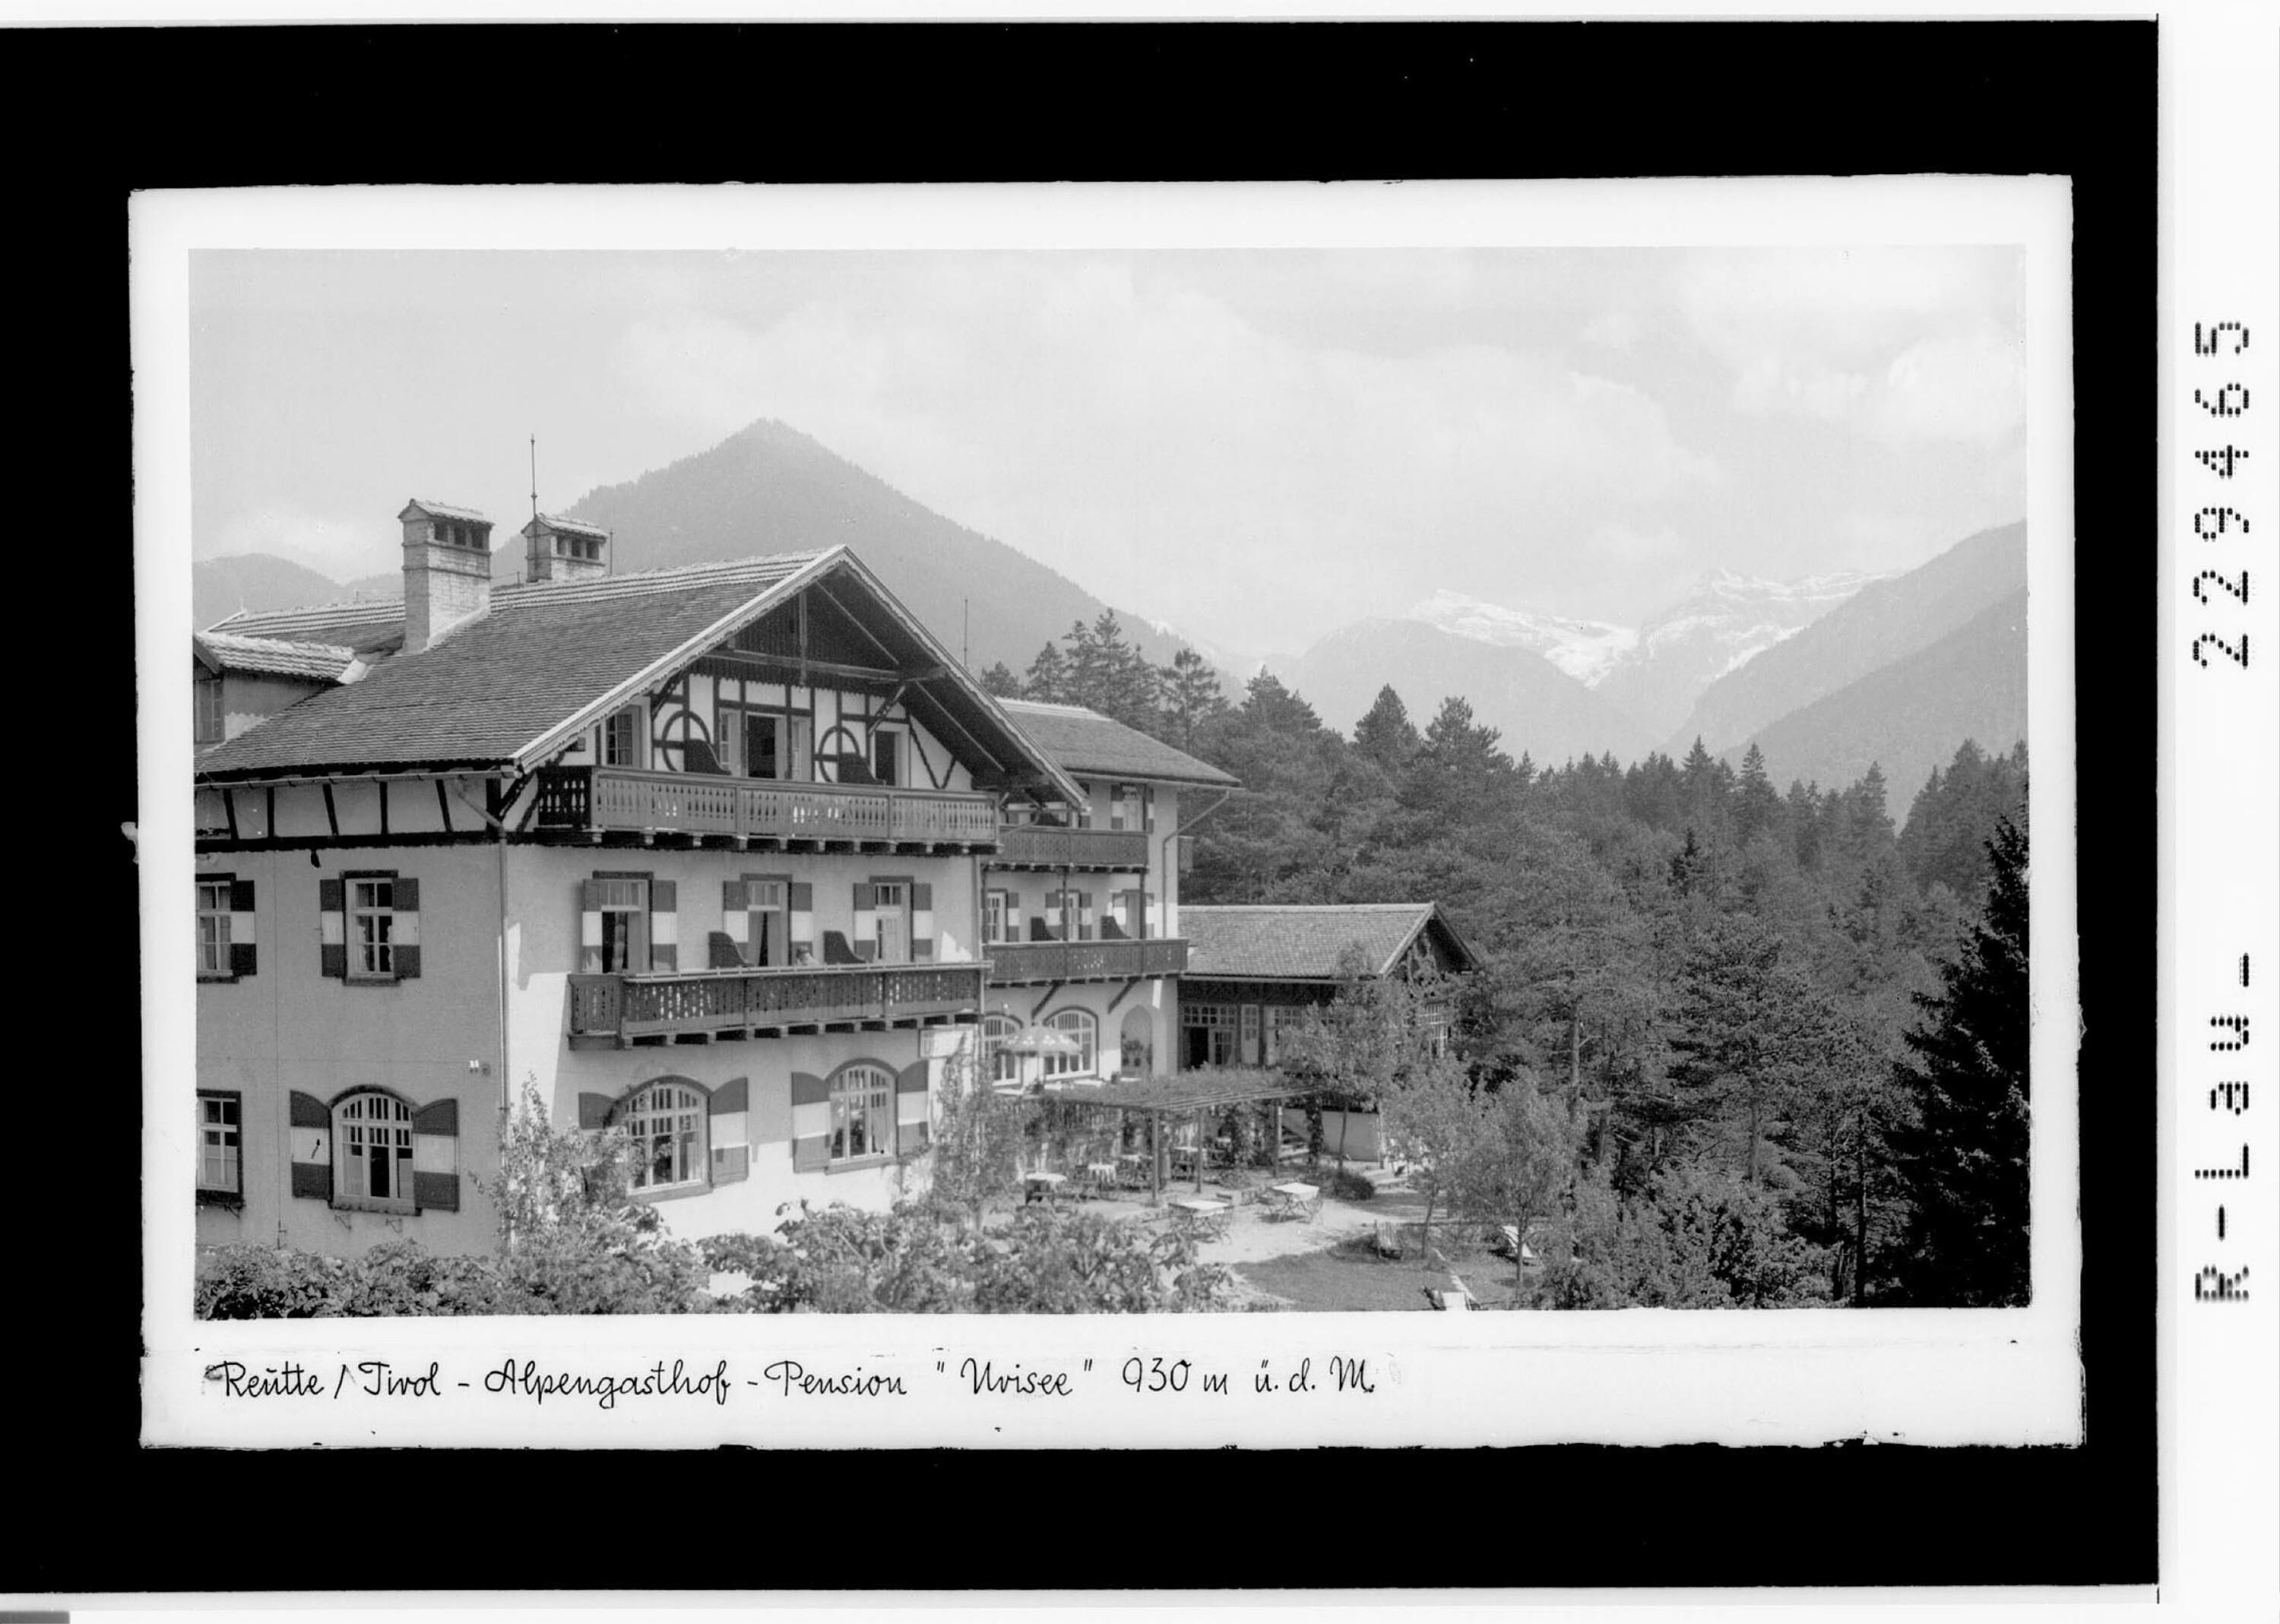 Reutte / Tirol - Alpengasthof Pension Urisee 930 m></div>


    <hr>
    <div class=